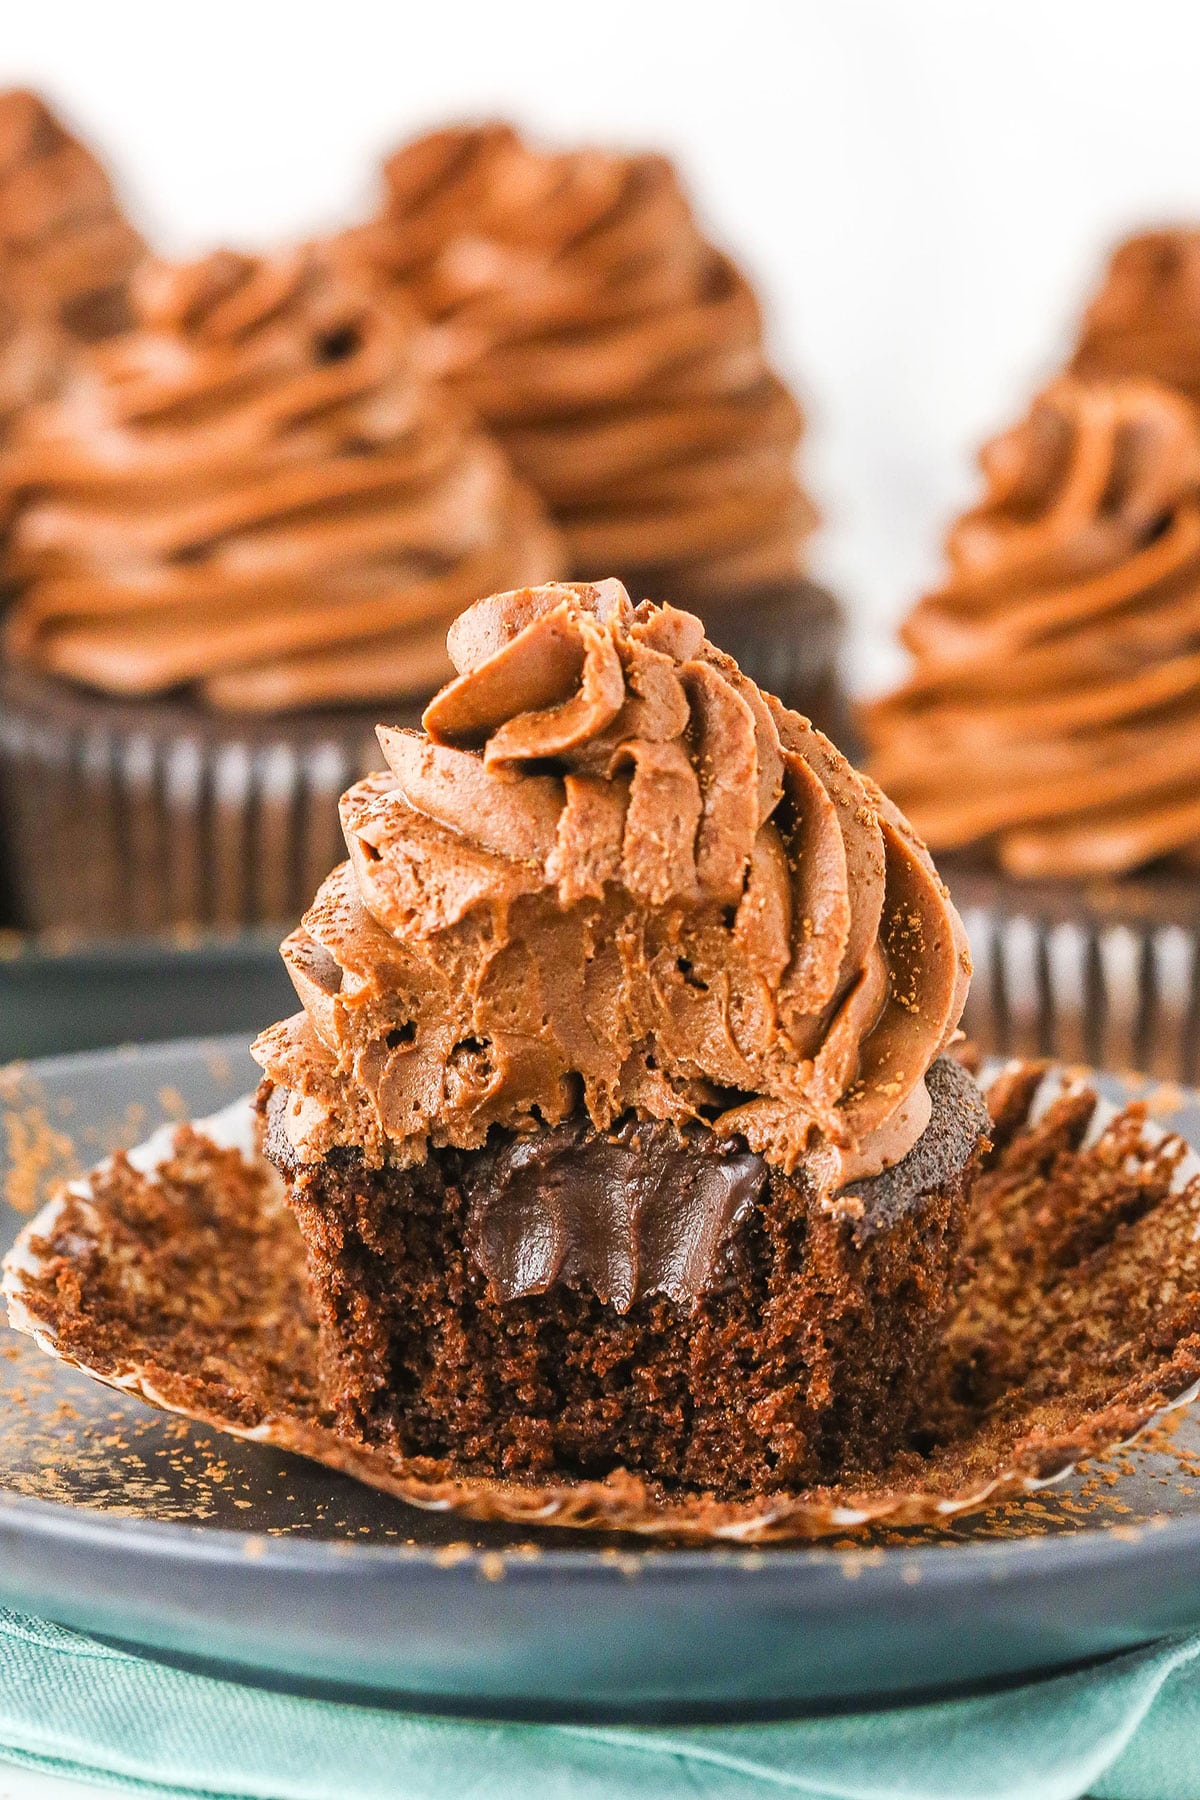 https://www.lifeloveandsugar.com/wp-content/uploads/2020/09/Chocolate-Cupcakes-with-Chocolate-Ganache-Filling4E.jpg